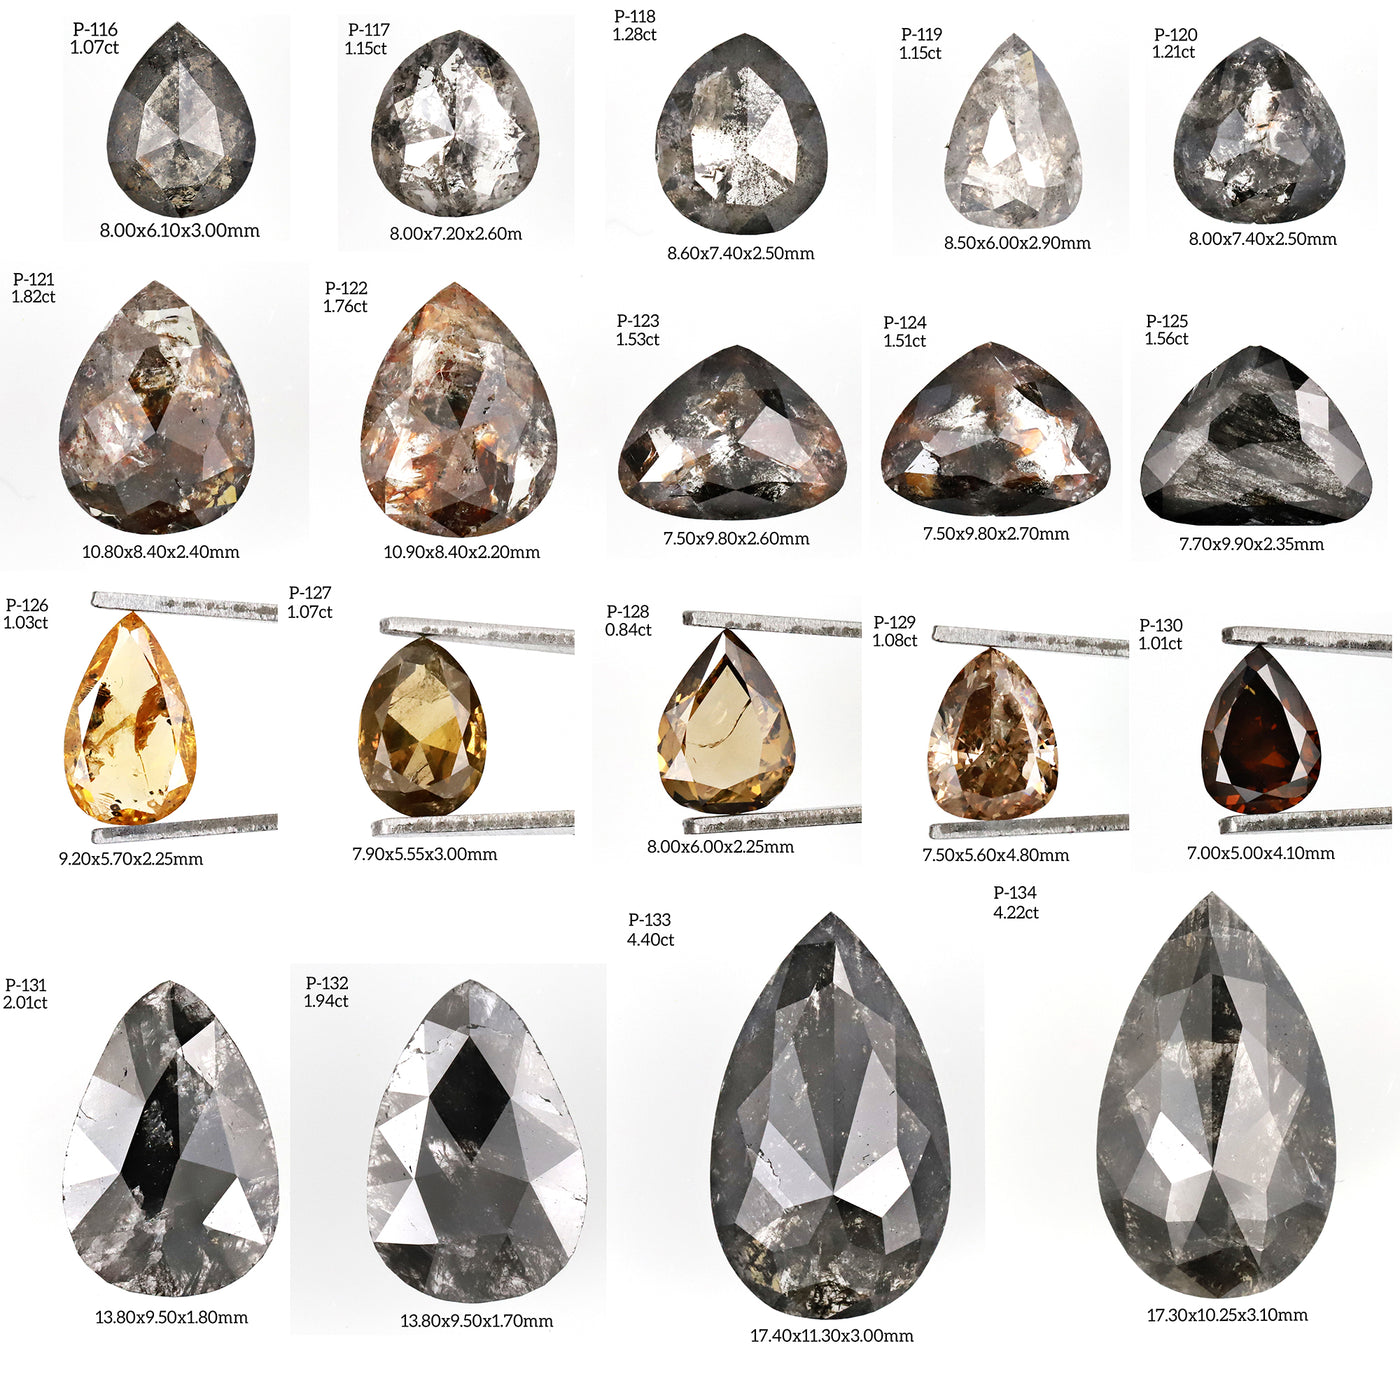 P124 - Salt and pepper pear diamond